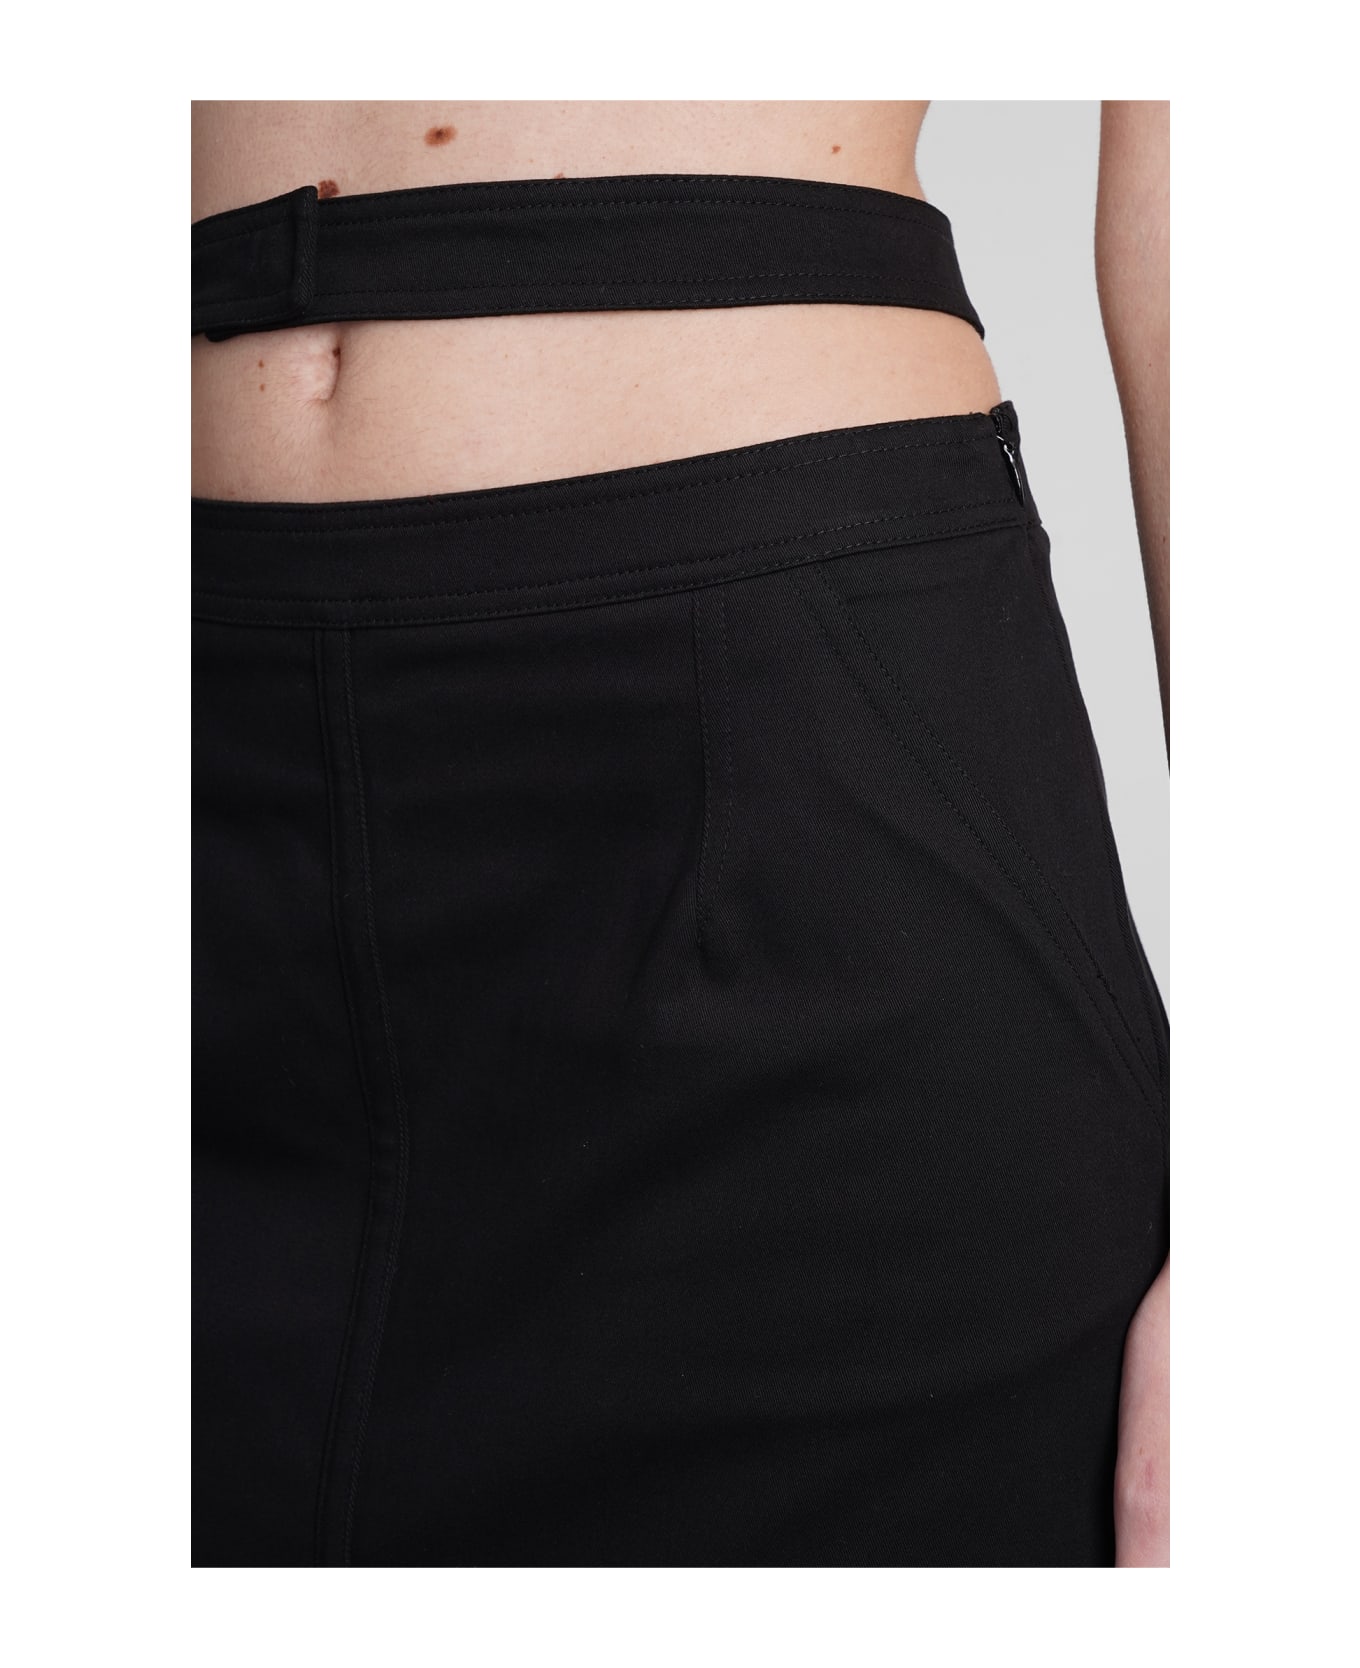 ANDREĀDAMO Skirt In Black Cotton - black